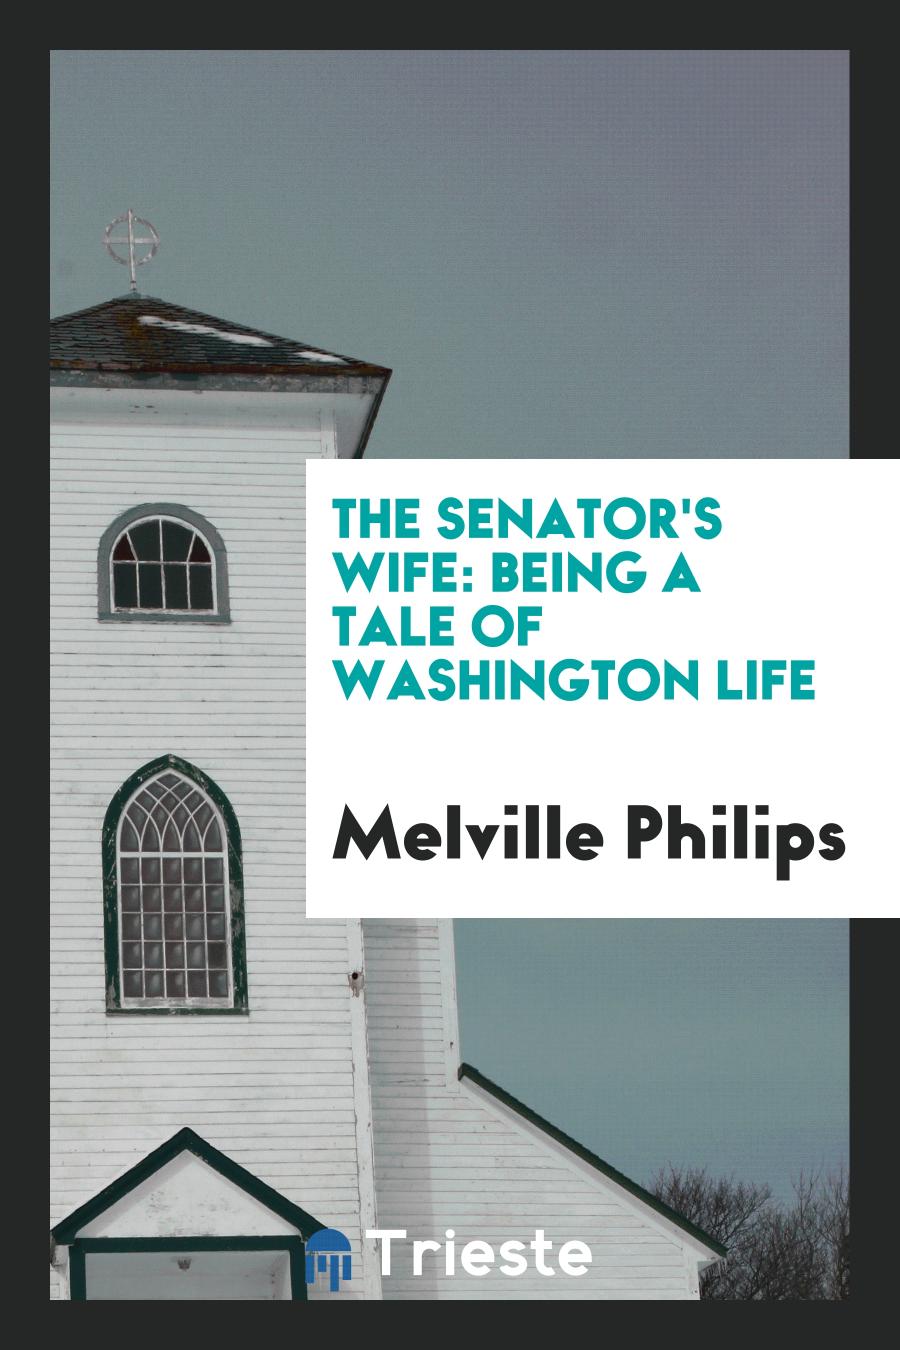 The Senator's wife: being a tale of Washington life